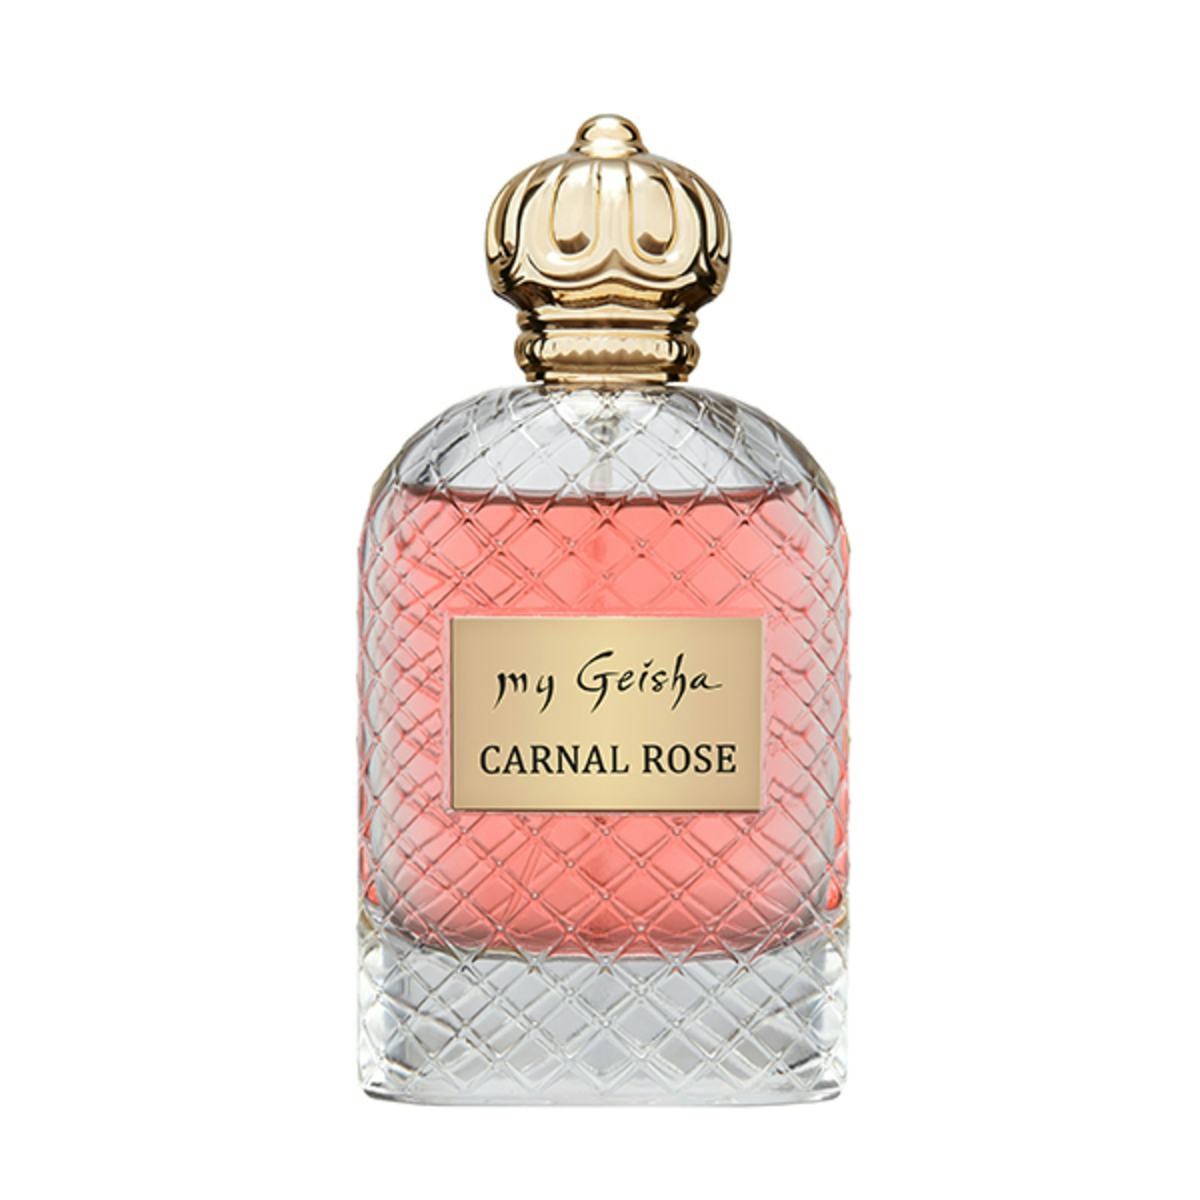 Extrait de parfum Carnal Rose 100ml, prodotto artigianale per la vendita diretta in Svizzera